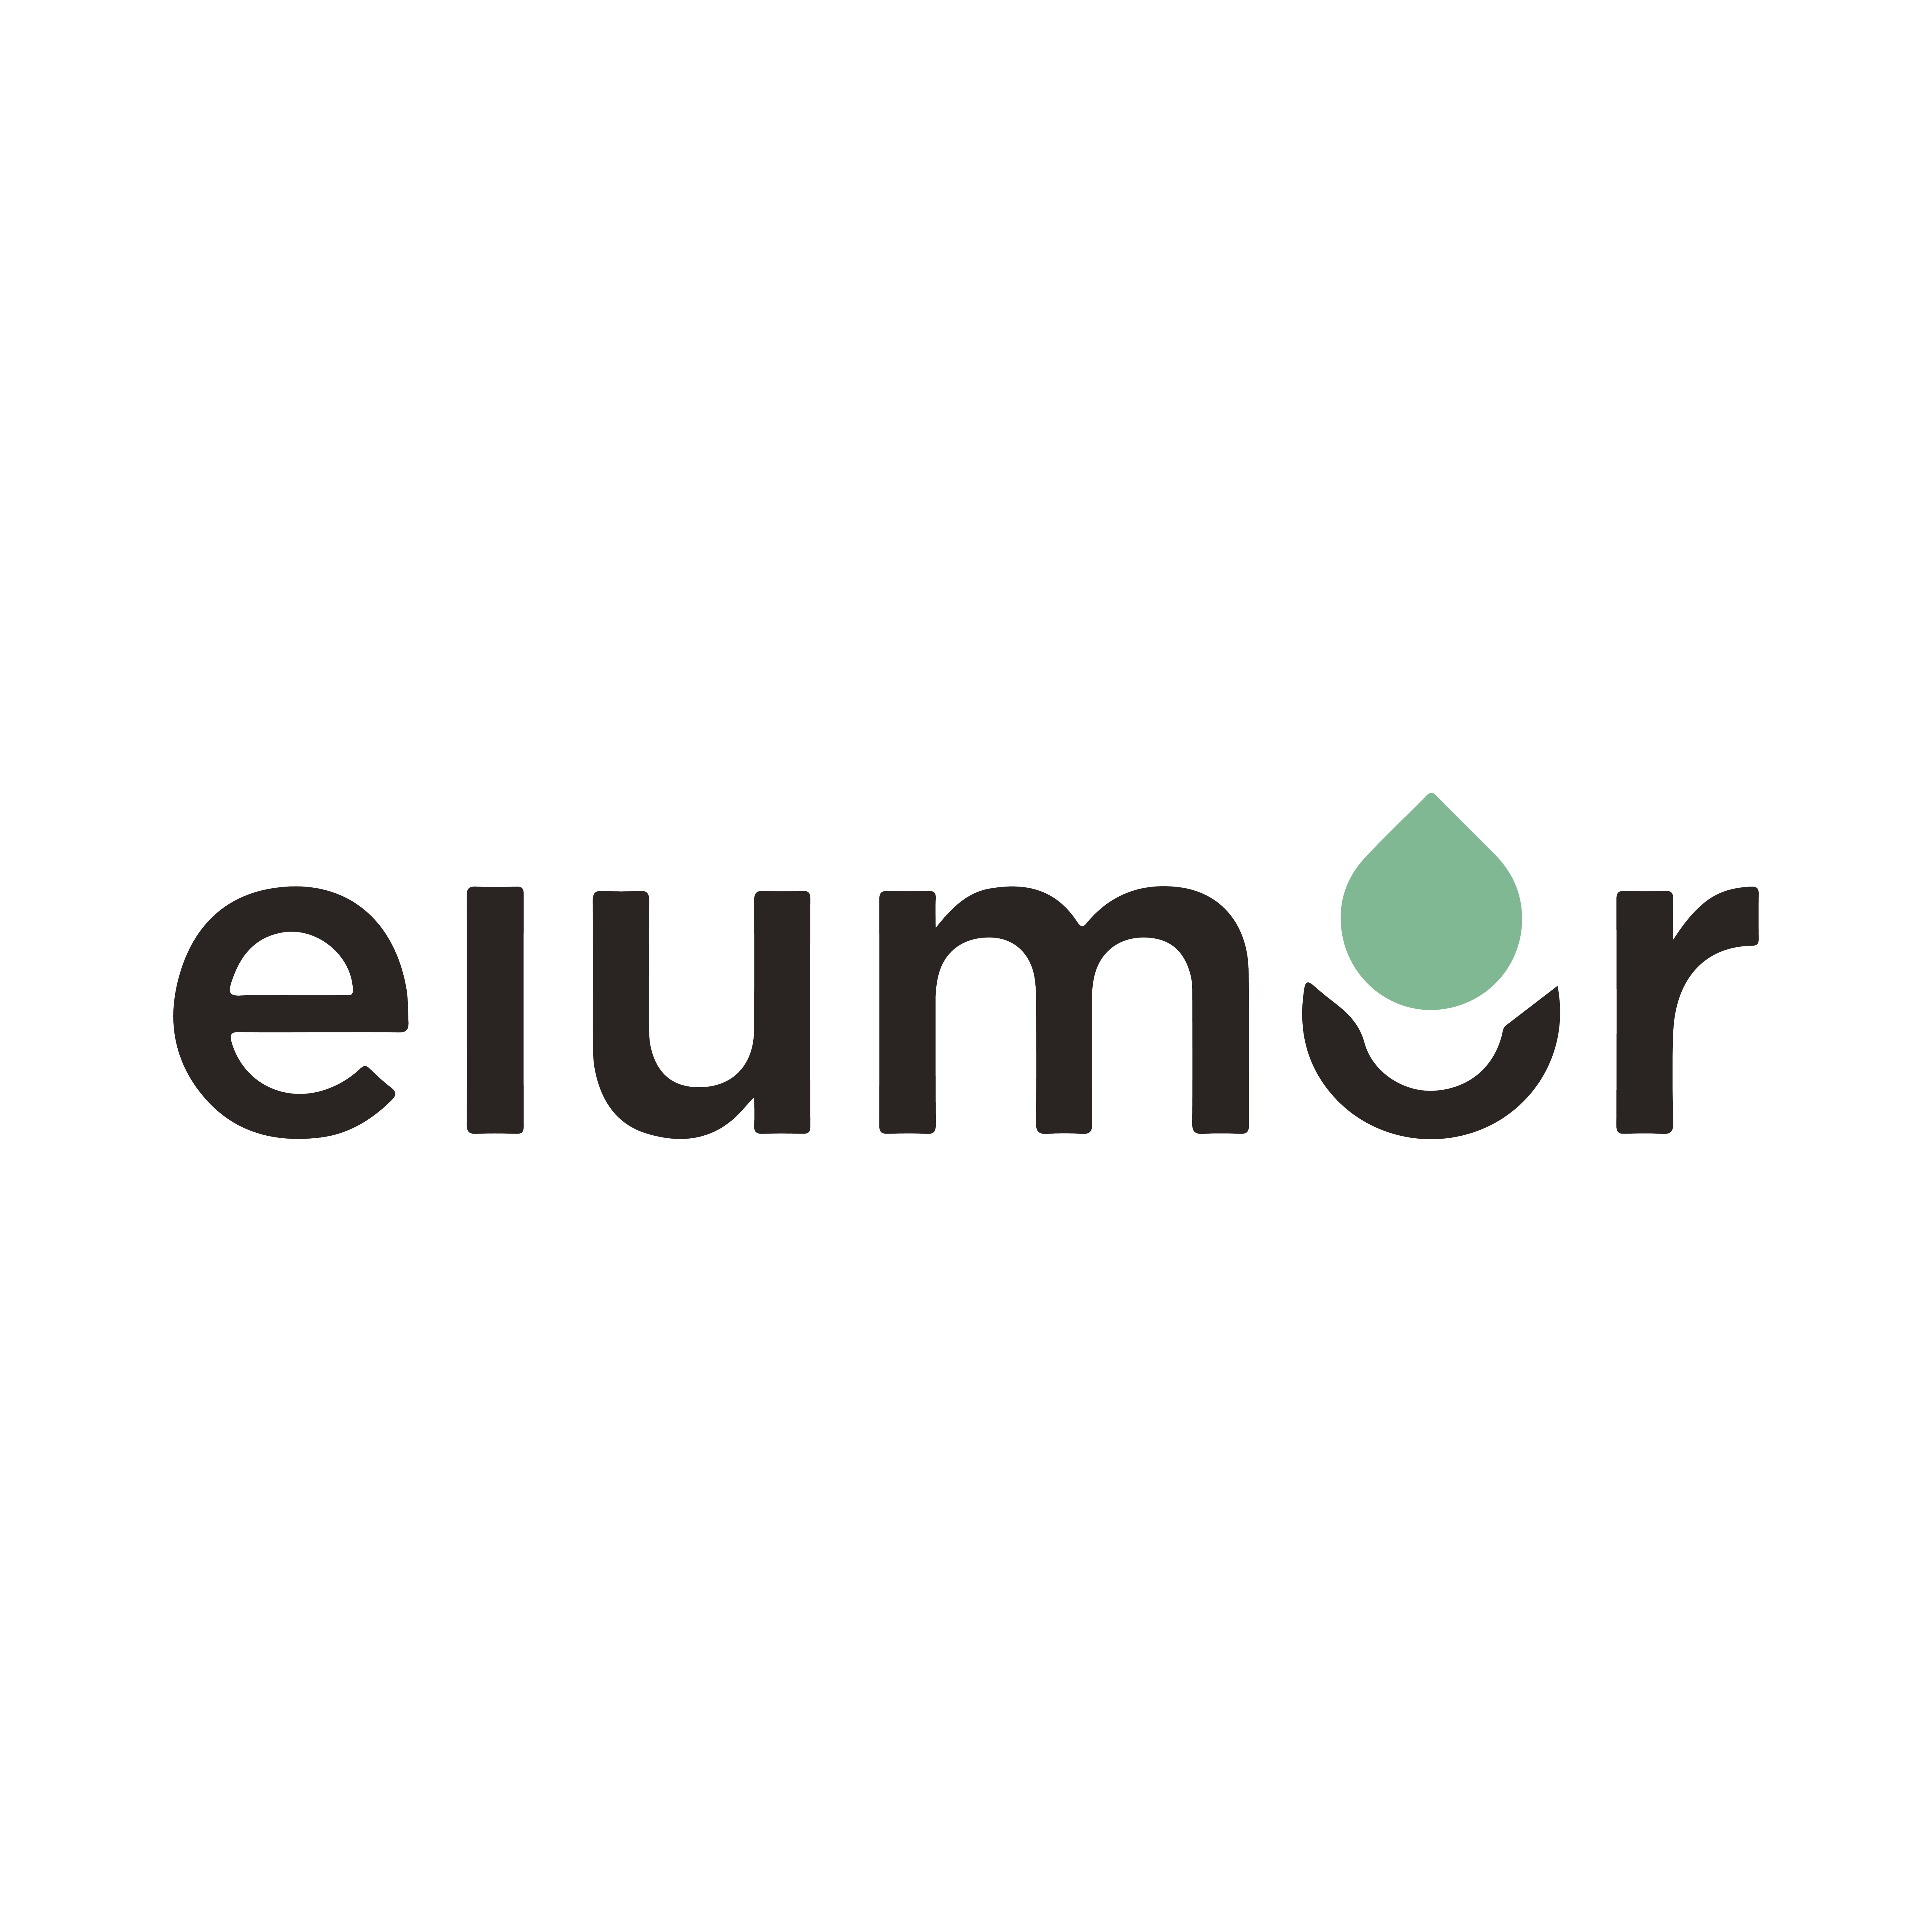 Elumor Indonesia Logo